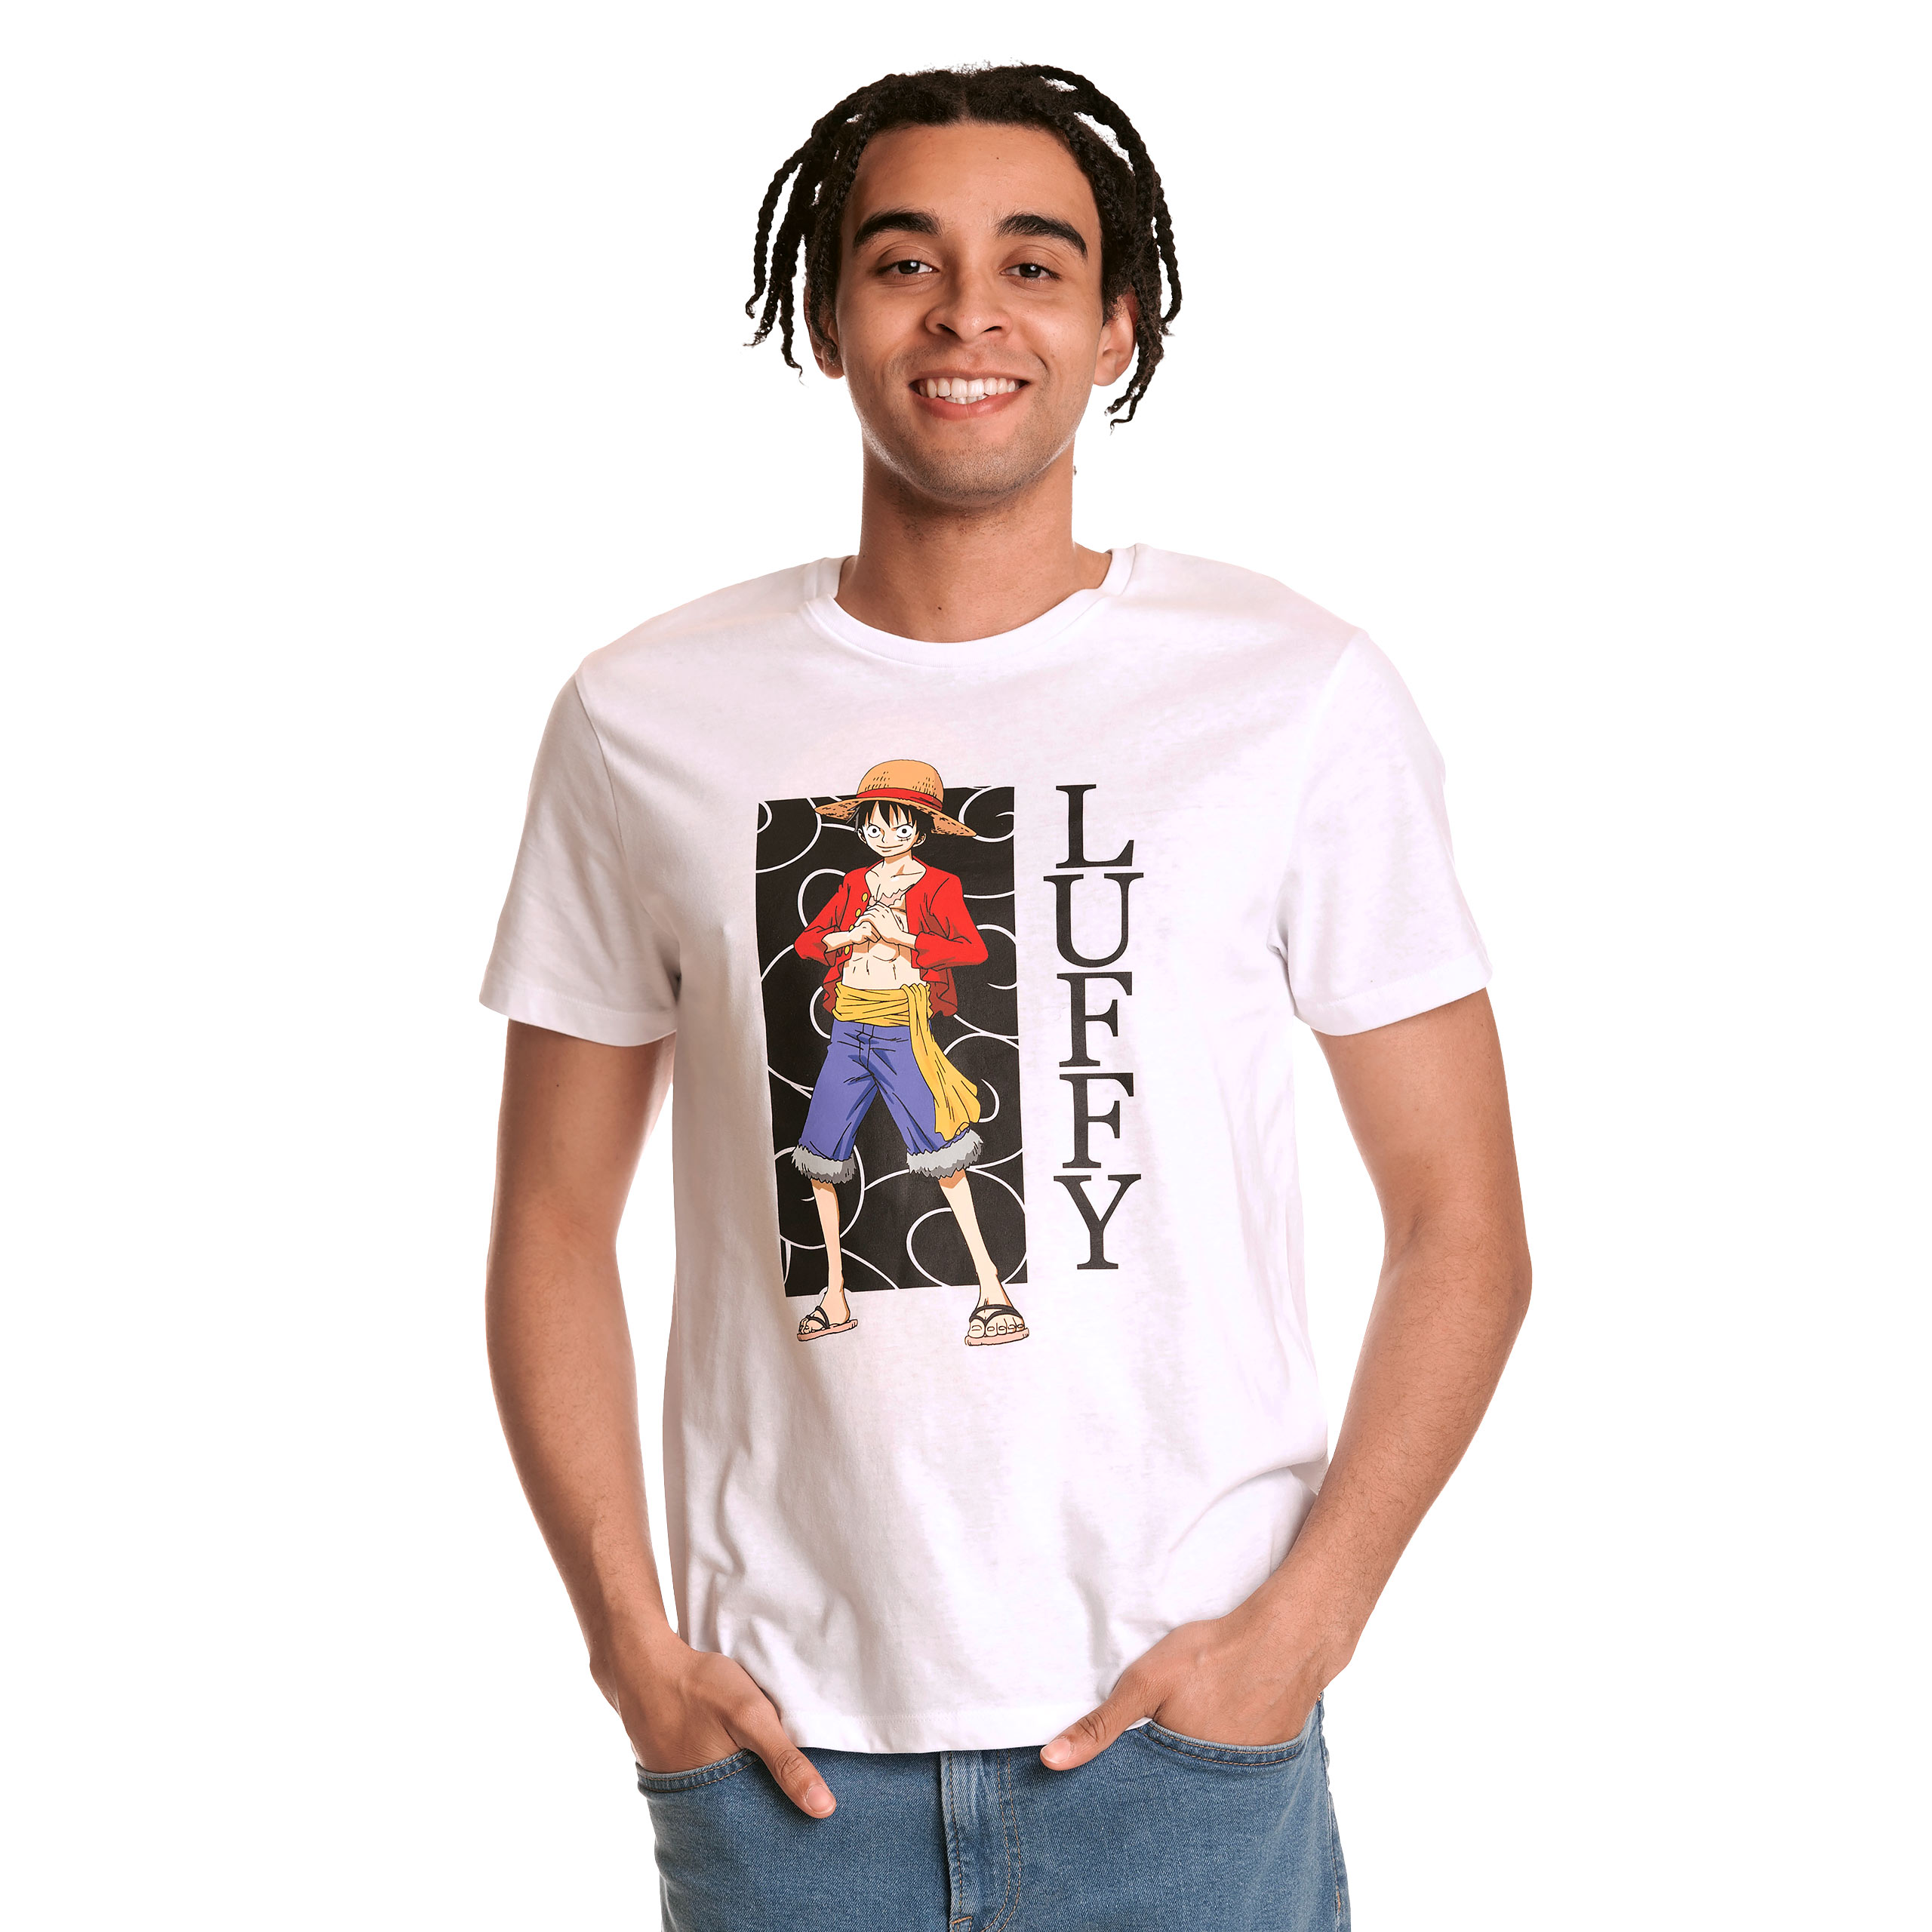 One Piece - Luffy T-shirt wit